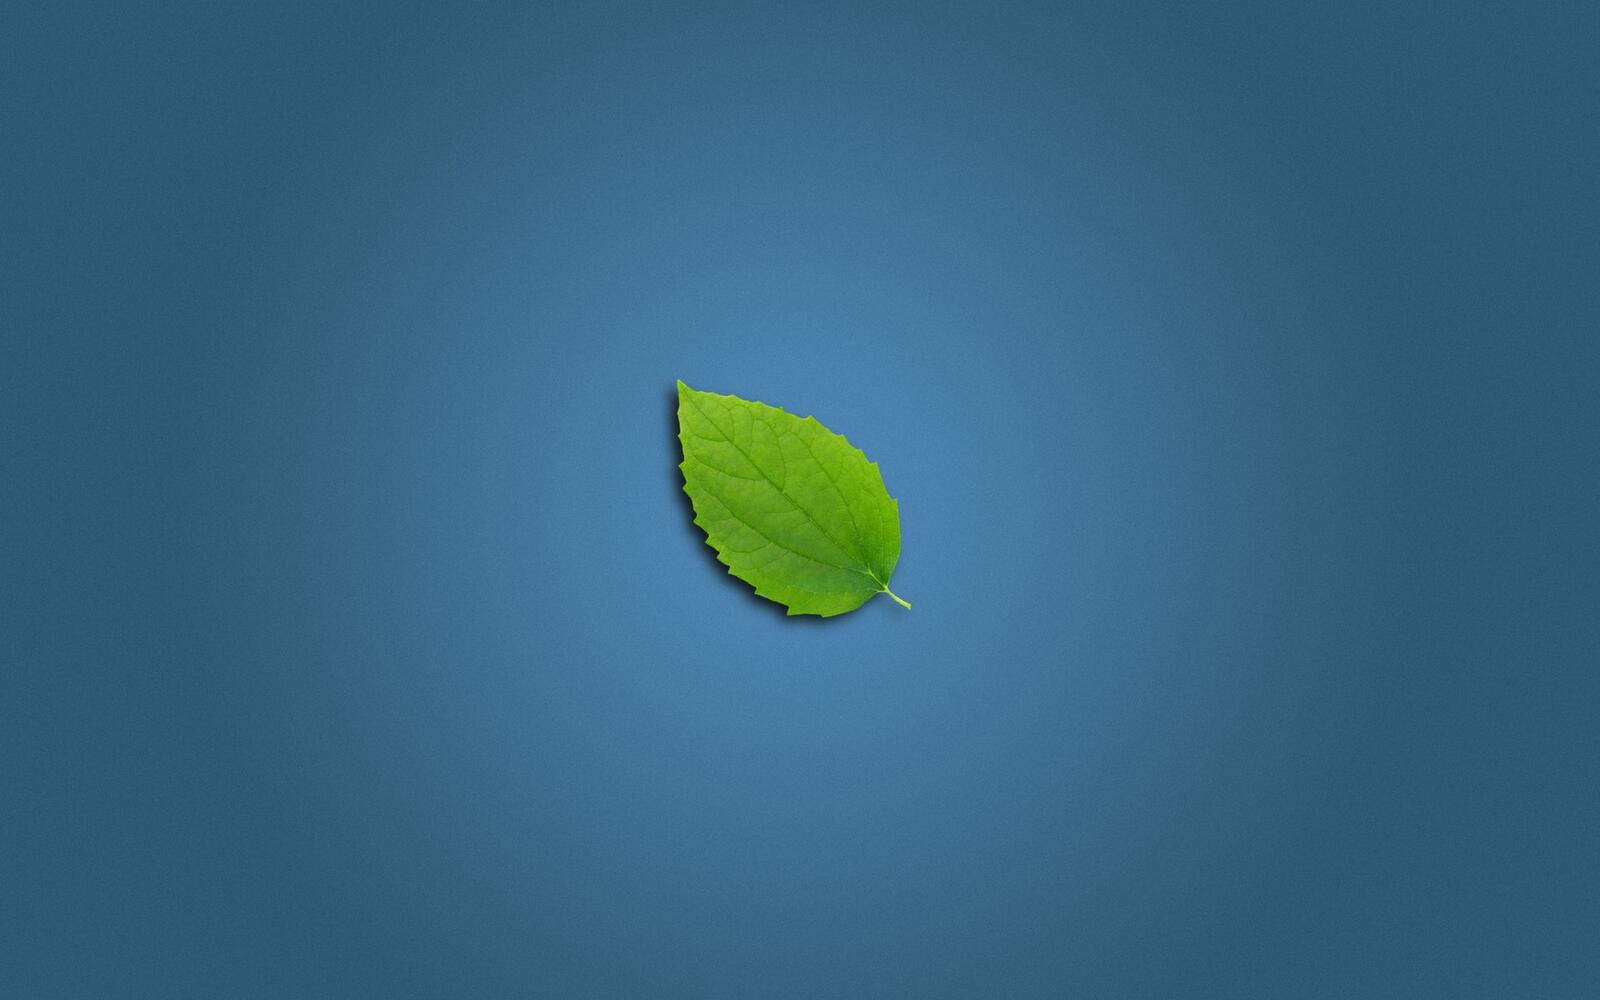 Wallpapers screensaver leaf green on the desktop